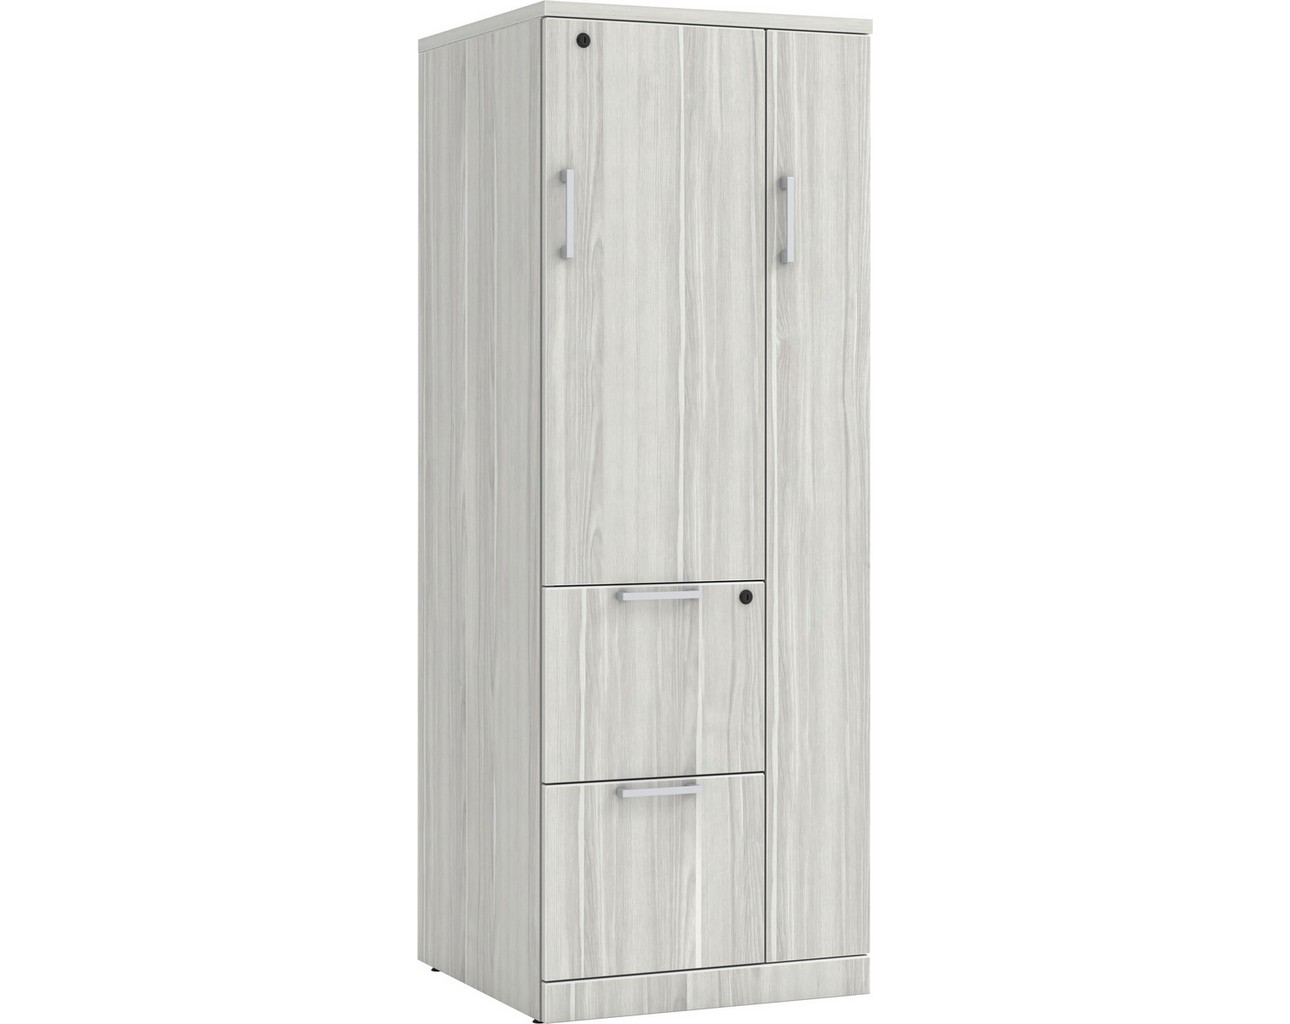 Locking Locker Wardrobe Storage Unit with Silver Birch Finish